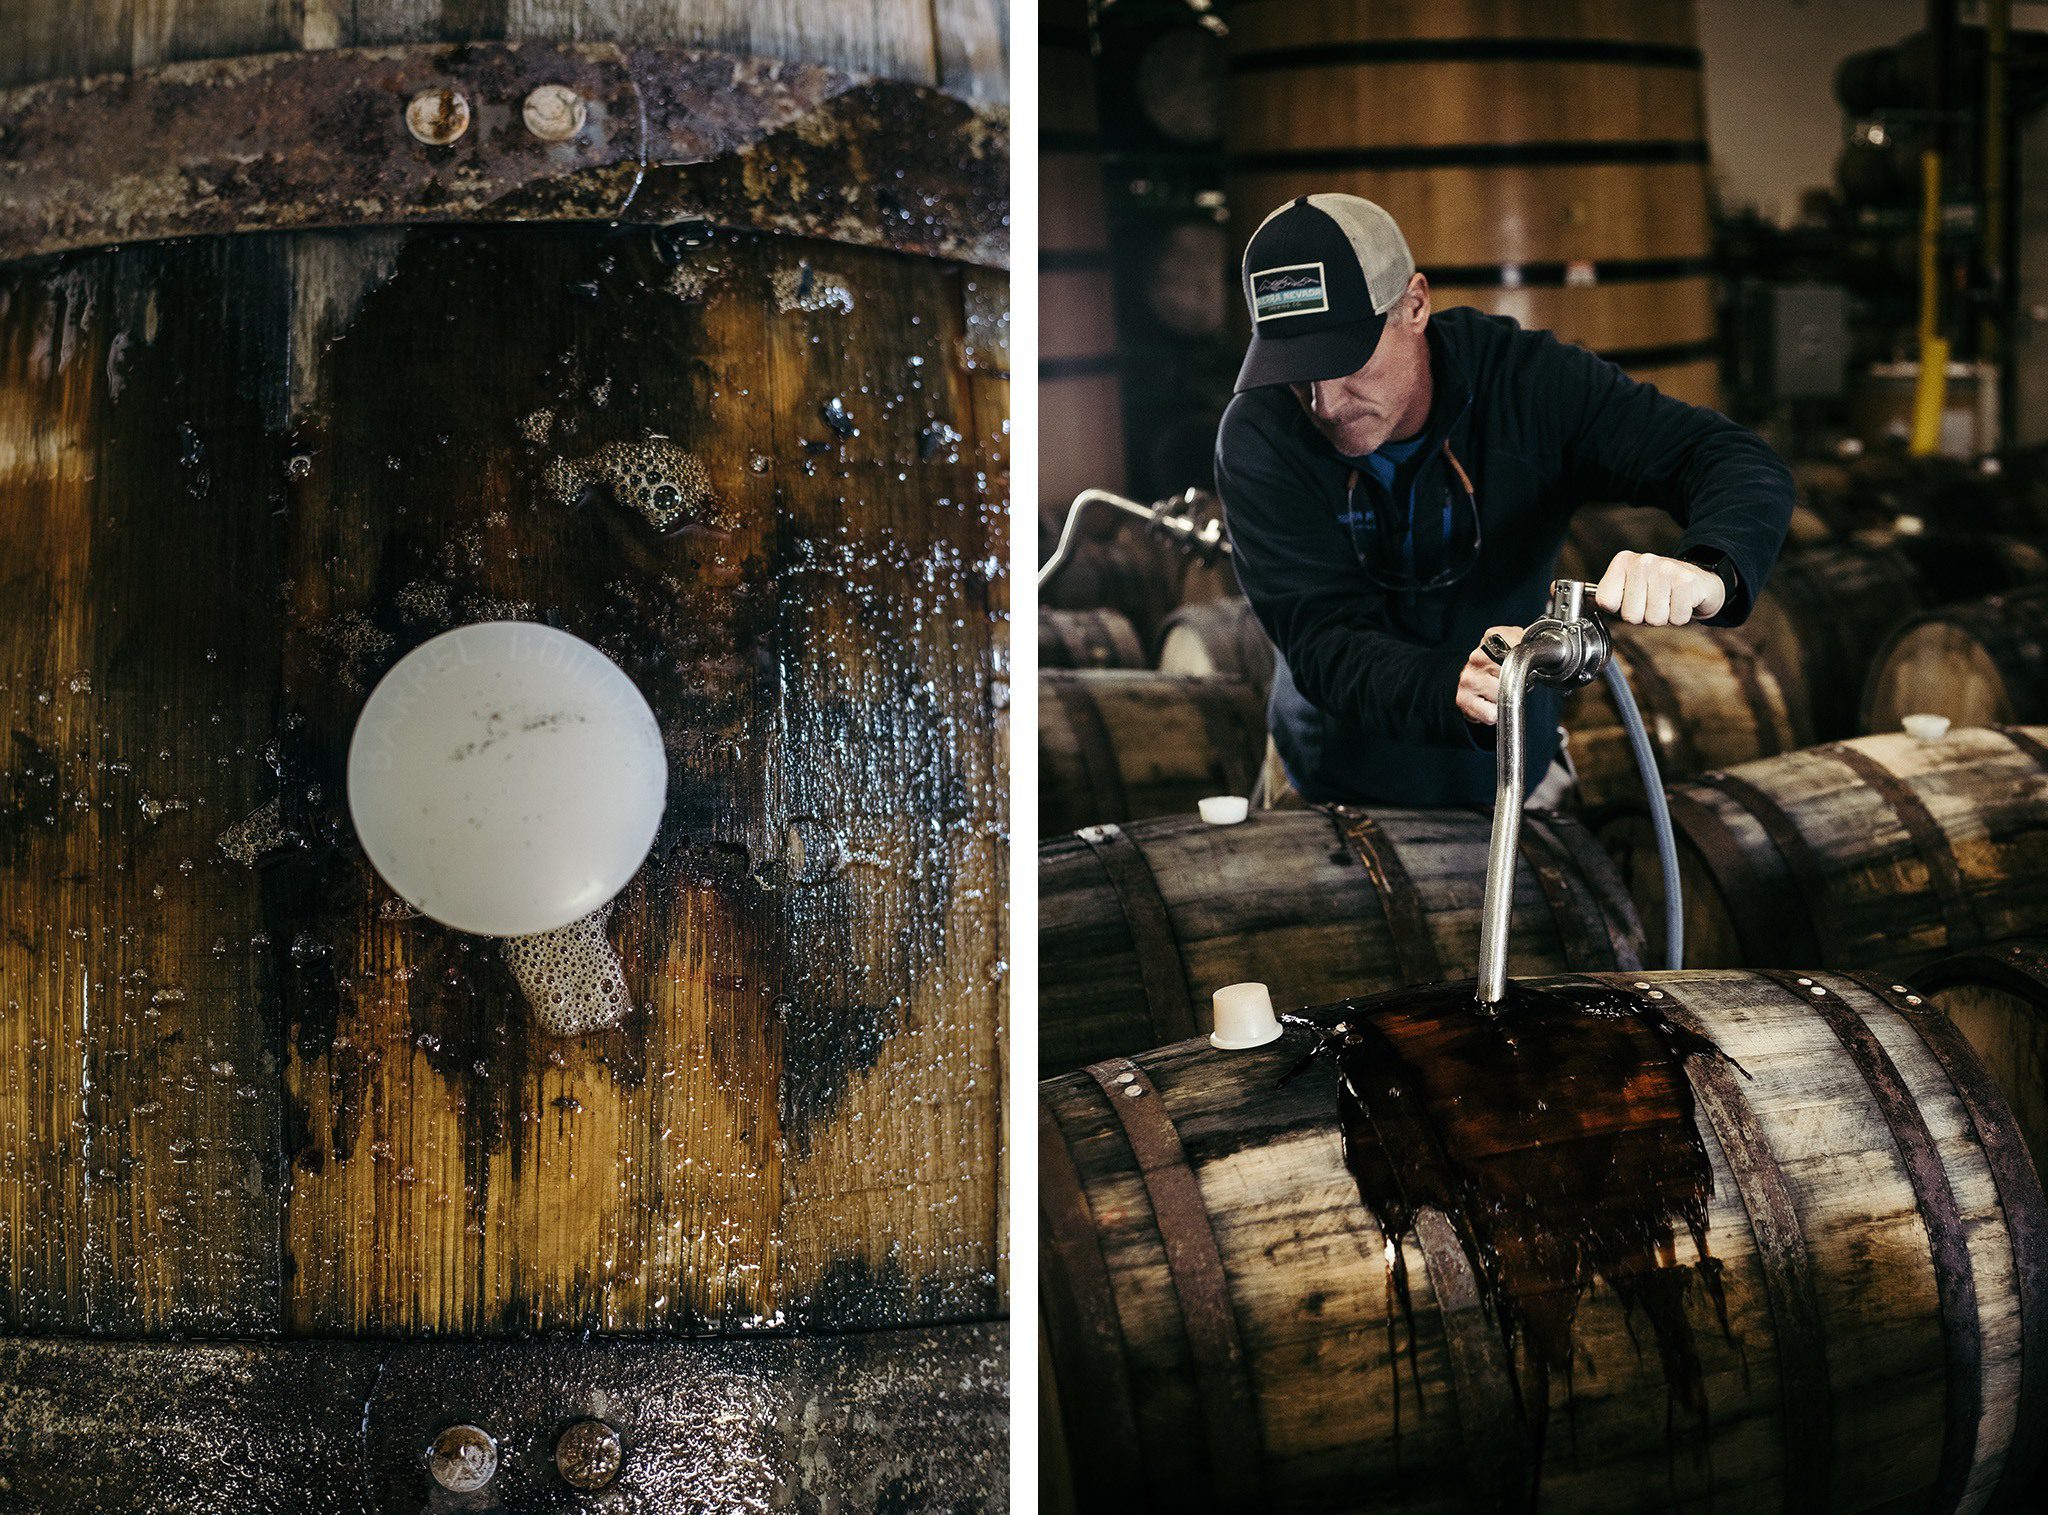 Brewer filling bourbon barrels with beer